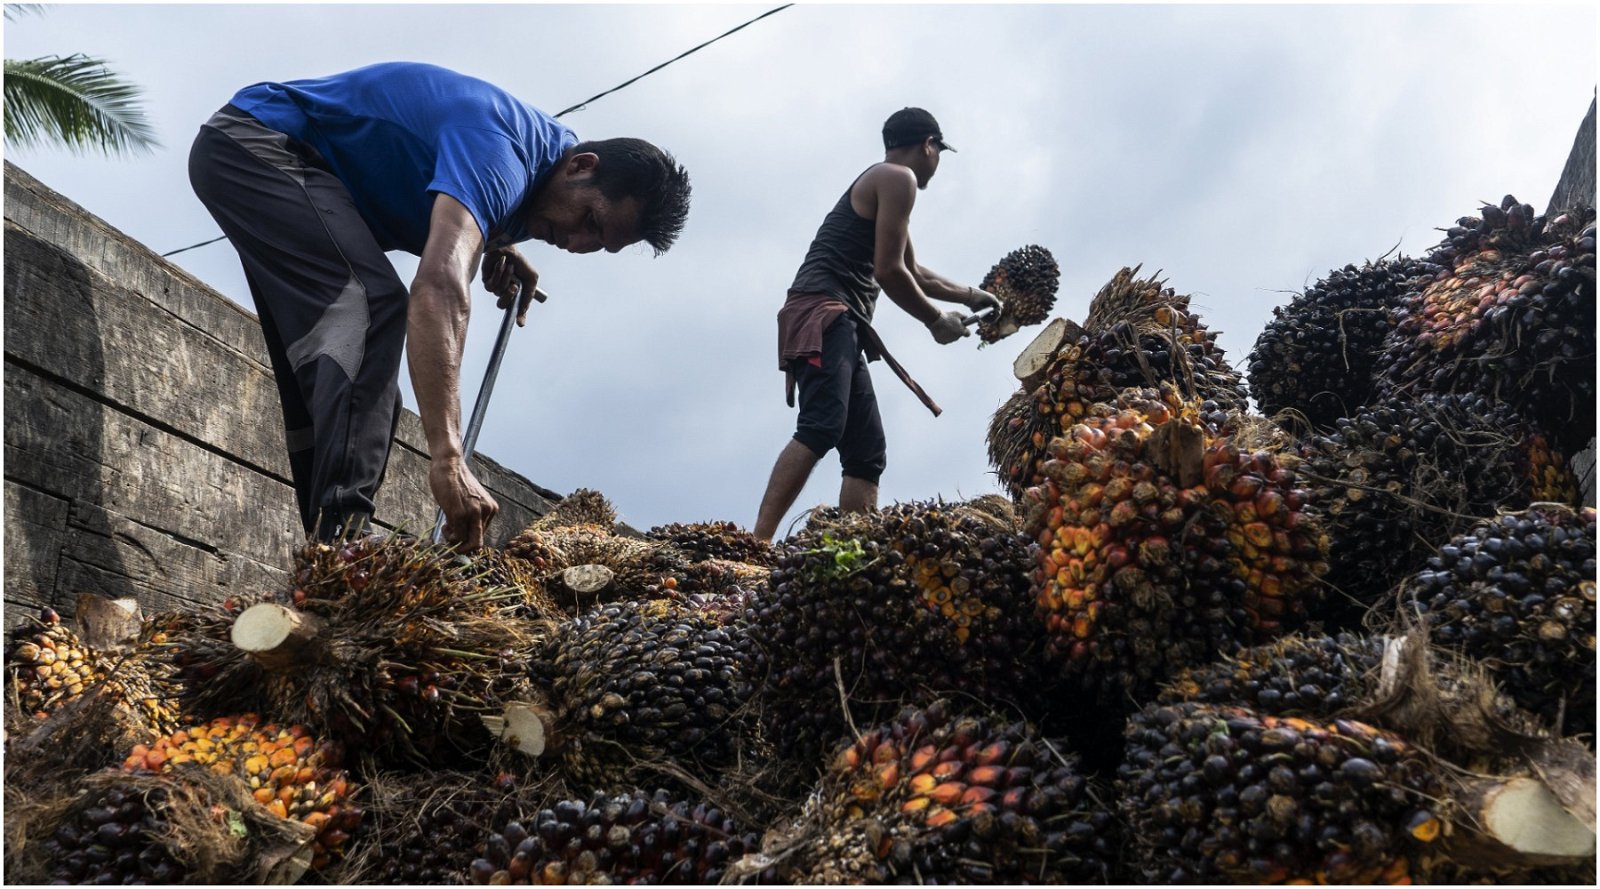 Indonesia berhenti mengekspor minyak sawit: Para ahli memprediksi kenaikan harga pangan di seluruh dunia